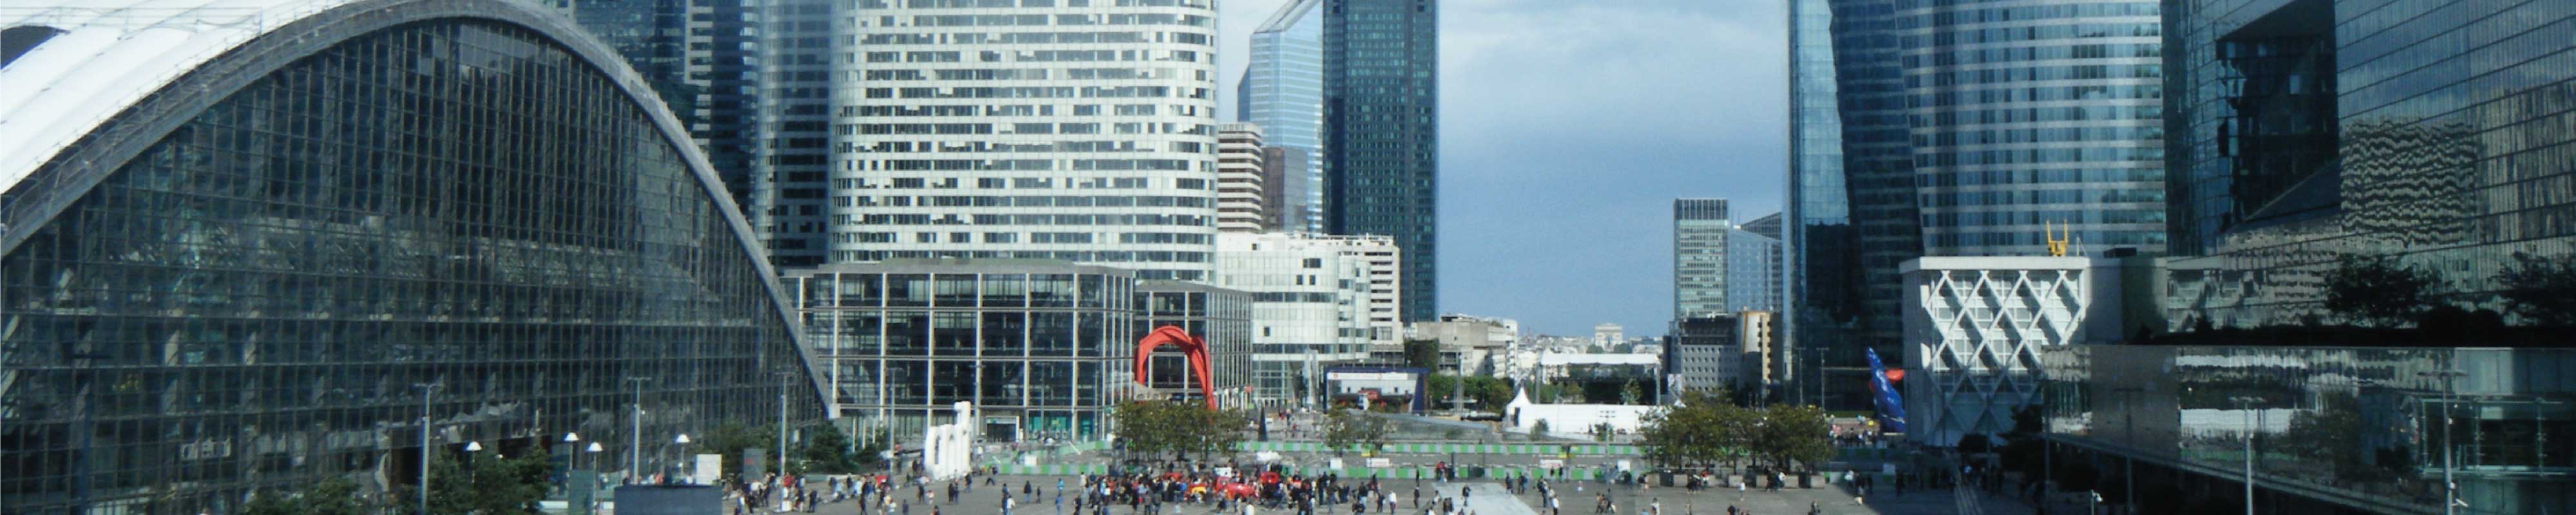 Depósito de Bagagem | La Défense em Paris - Nannybag